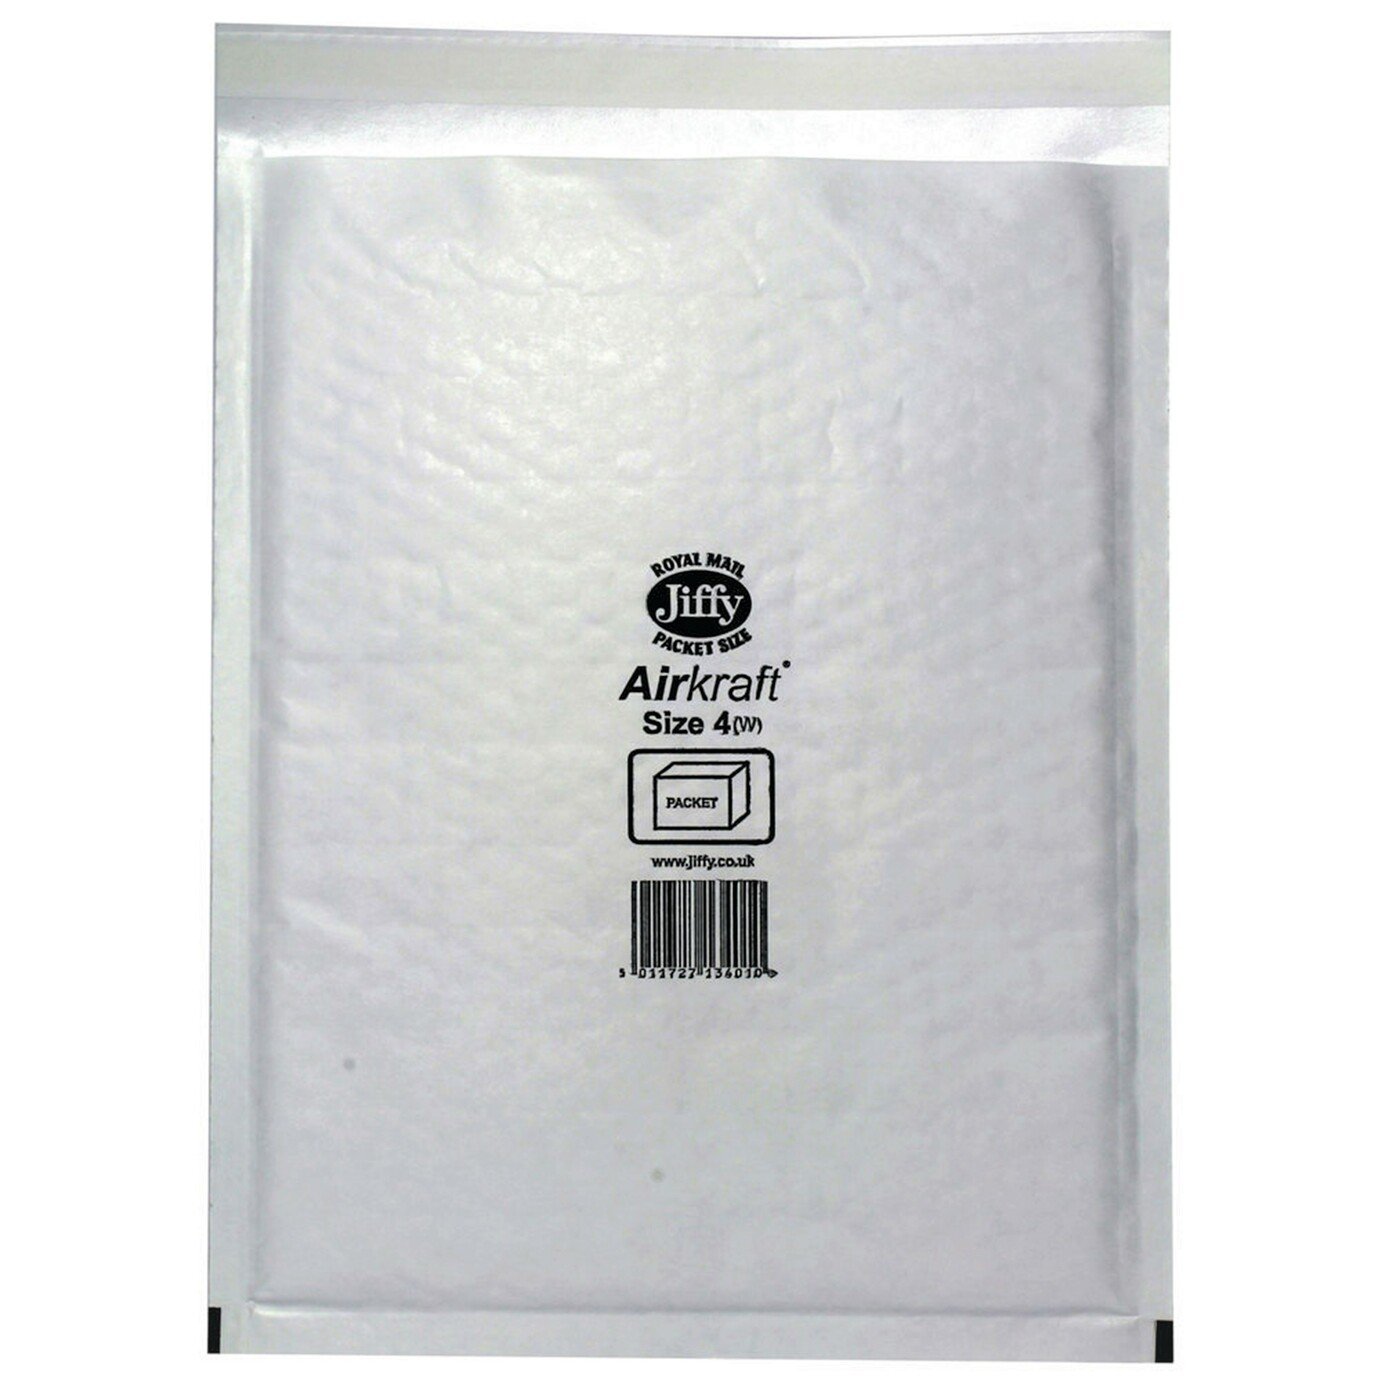 Jiffy Postal Bag Envelope Size 4 240mm x 320mm - Pack of 10